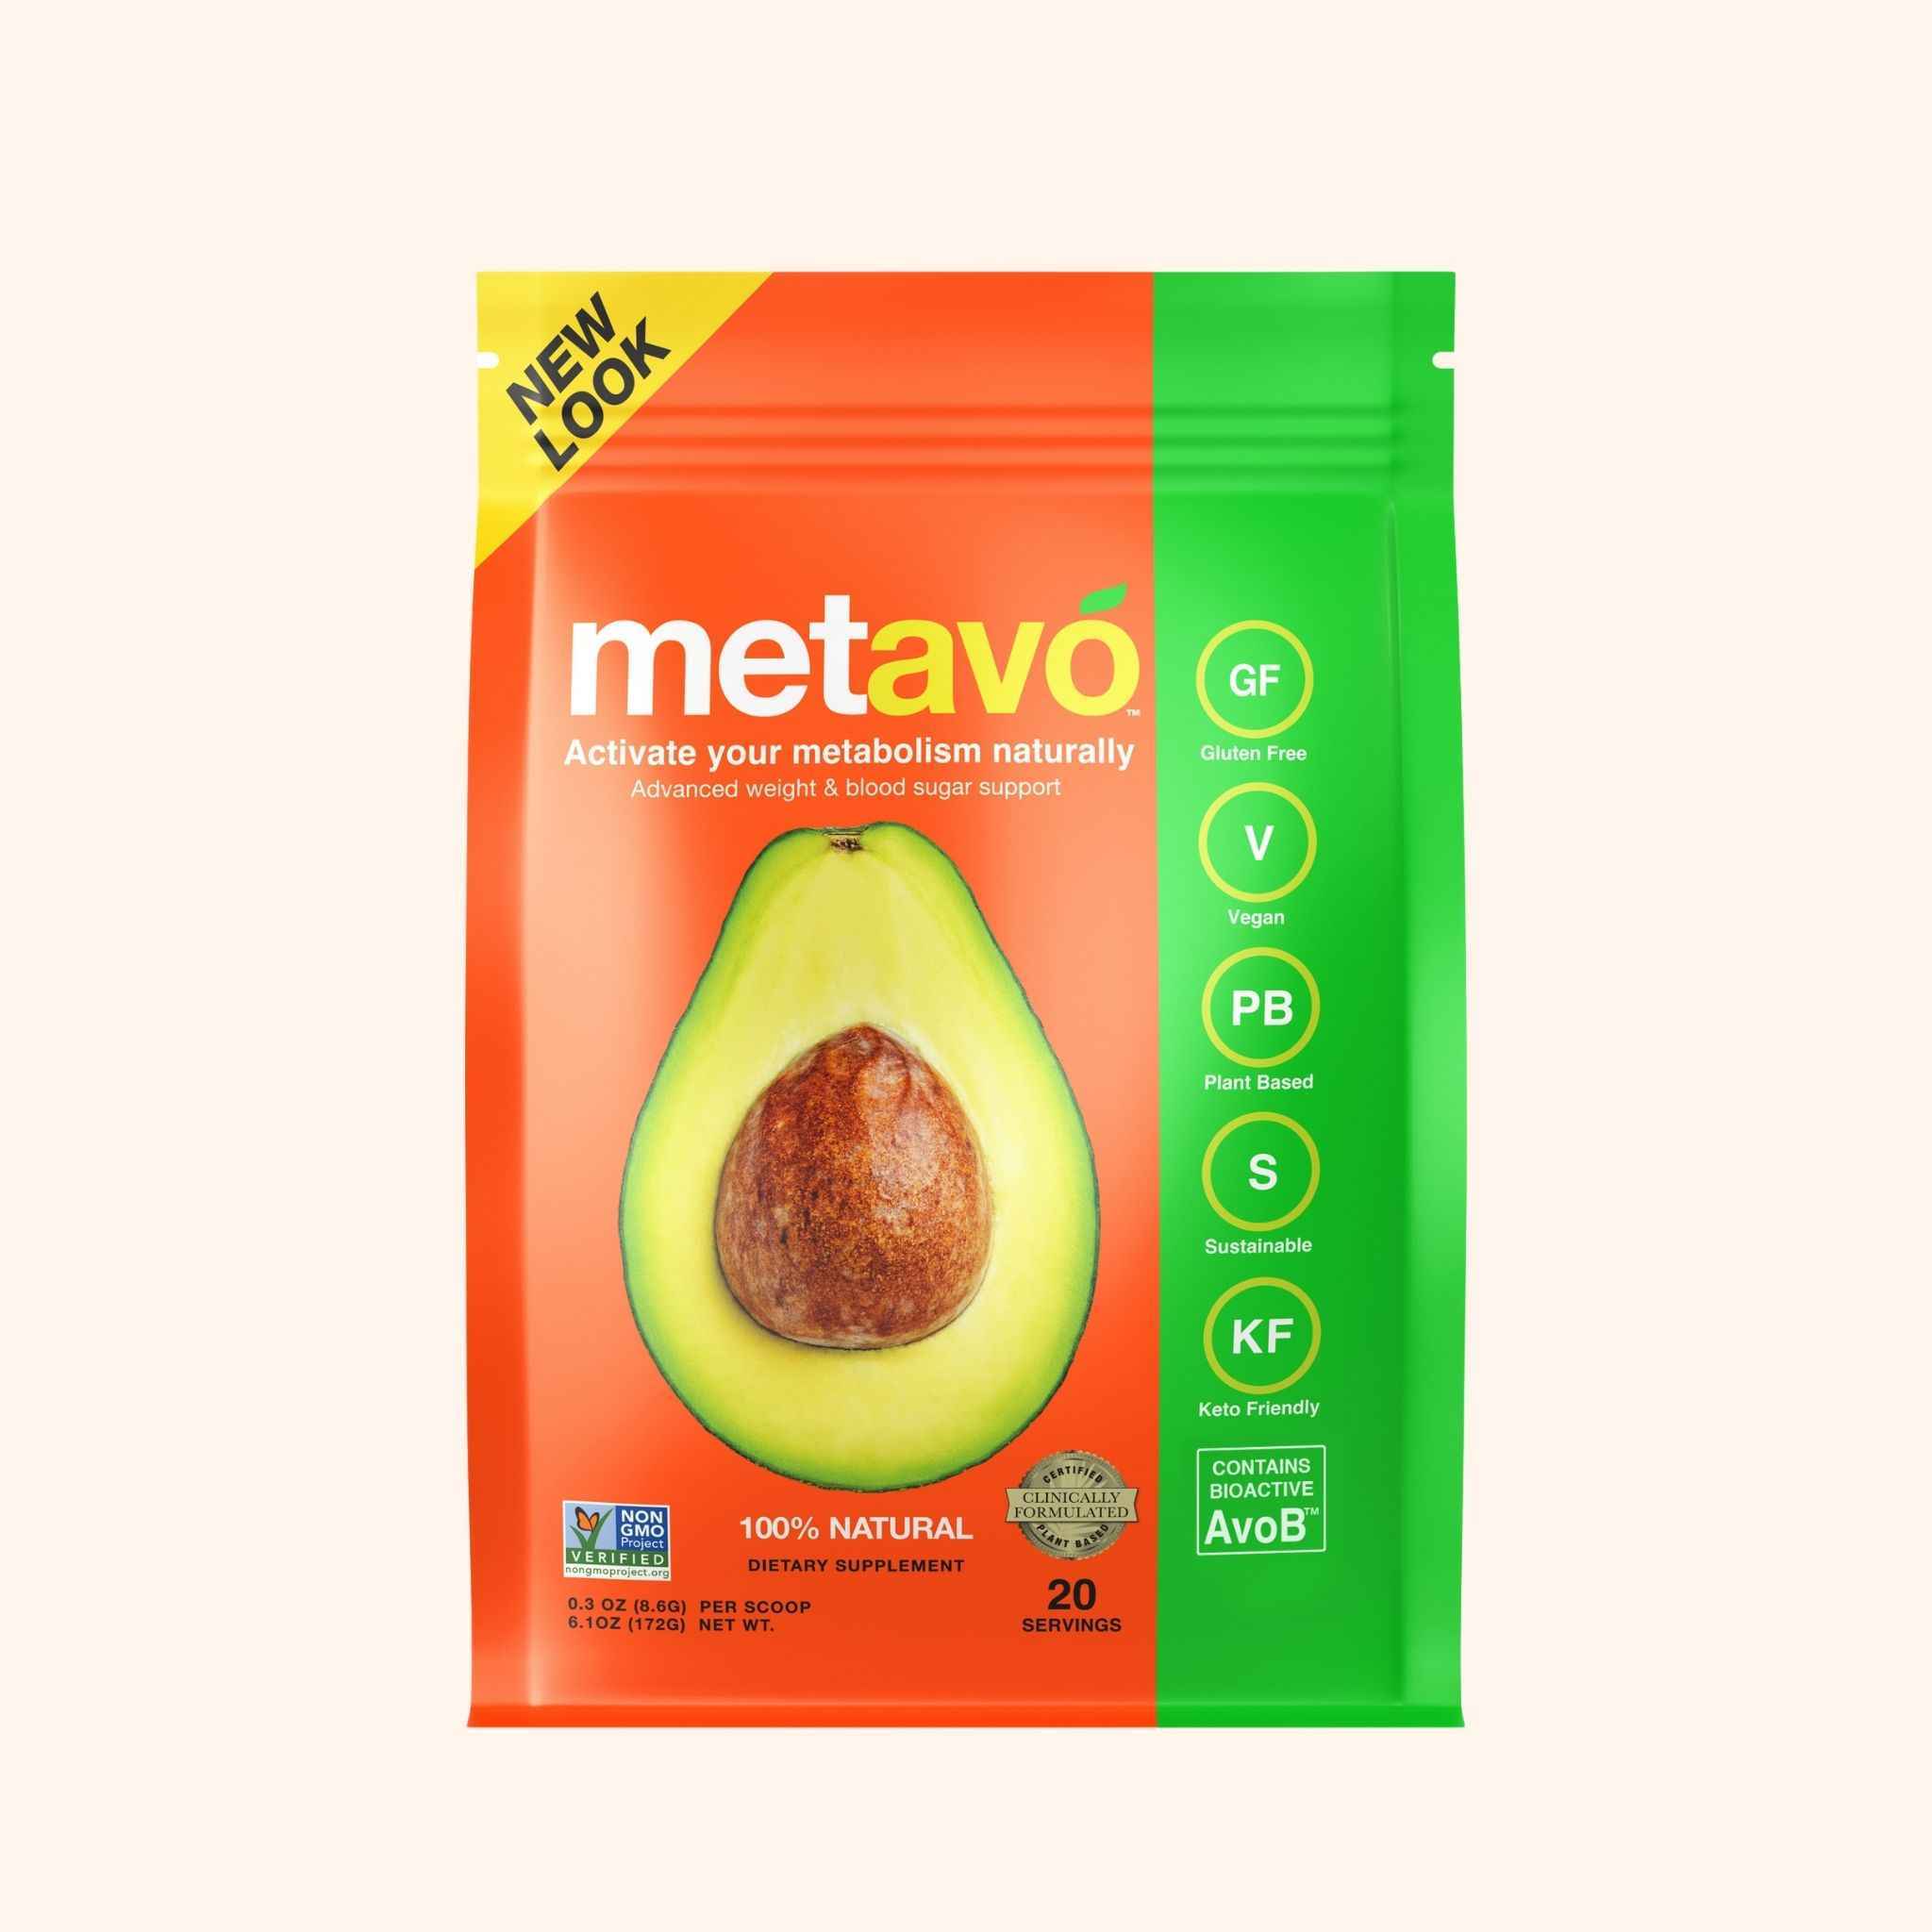 Metavo Metabolism Booster Smoothie Mix Product Image